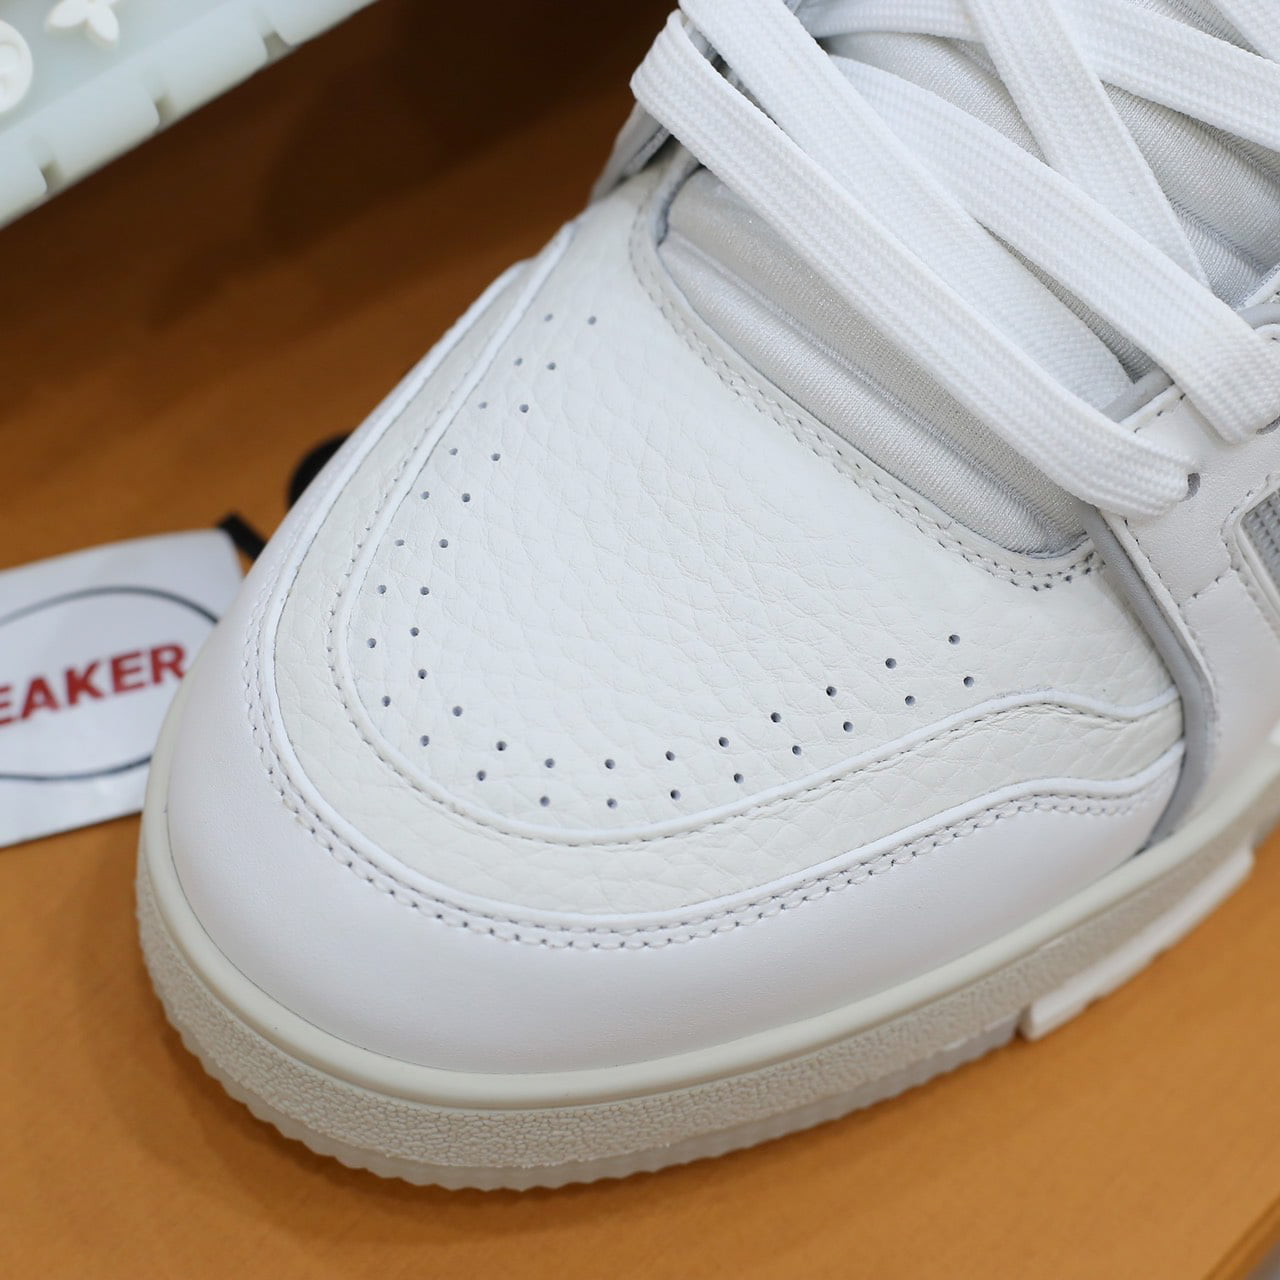 Giày Louis Vuitton Trainer #54 Signature White Best Quality - Shop giày  Replica™